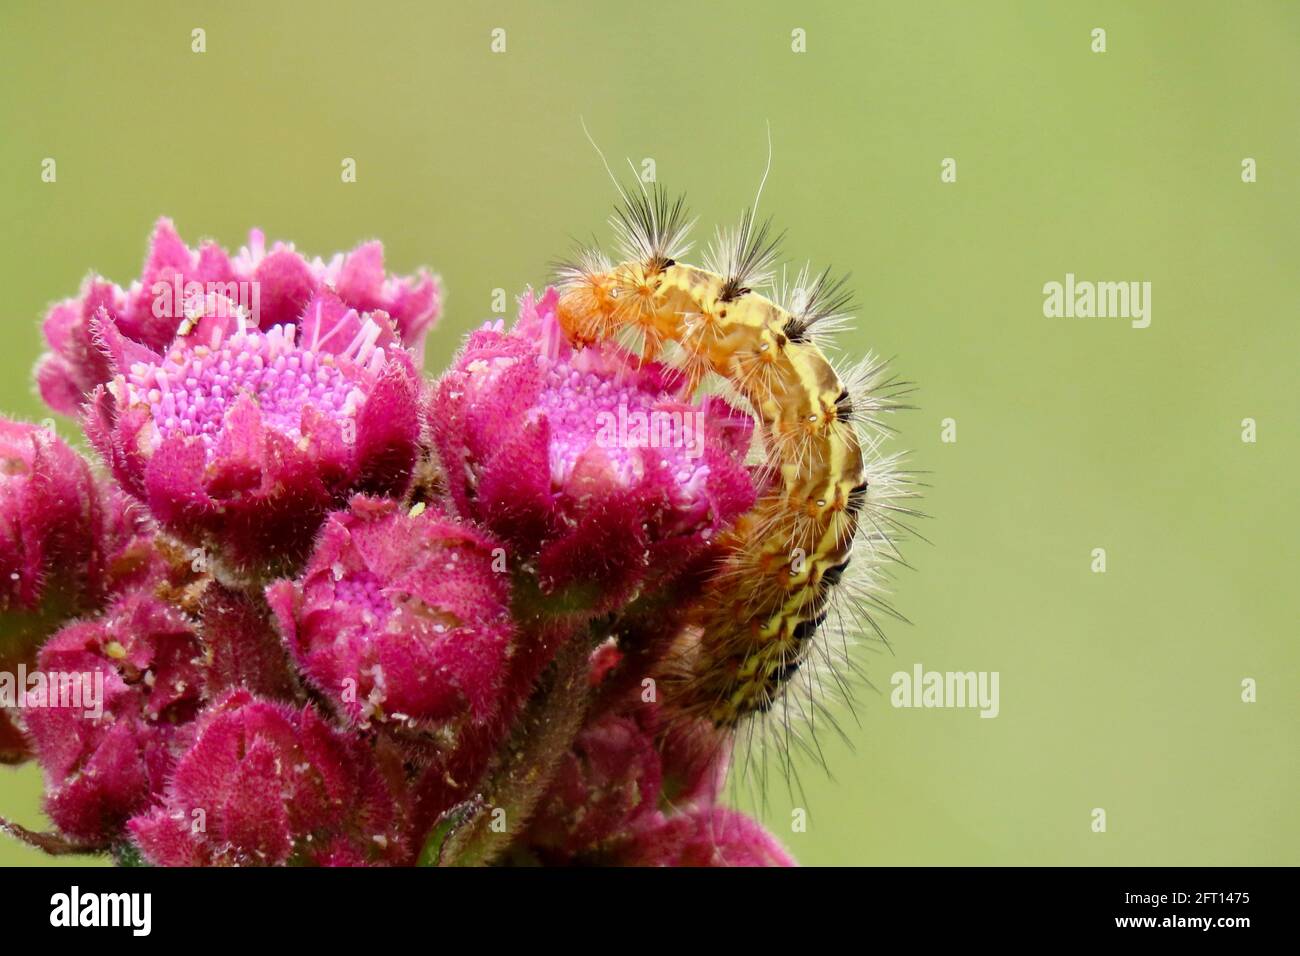 Furry caterpillar explores a pink pom pom weed Stock Photo